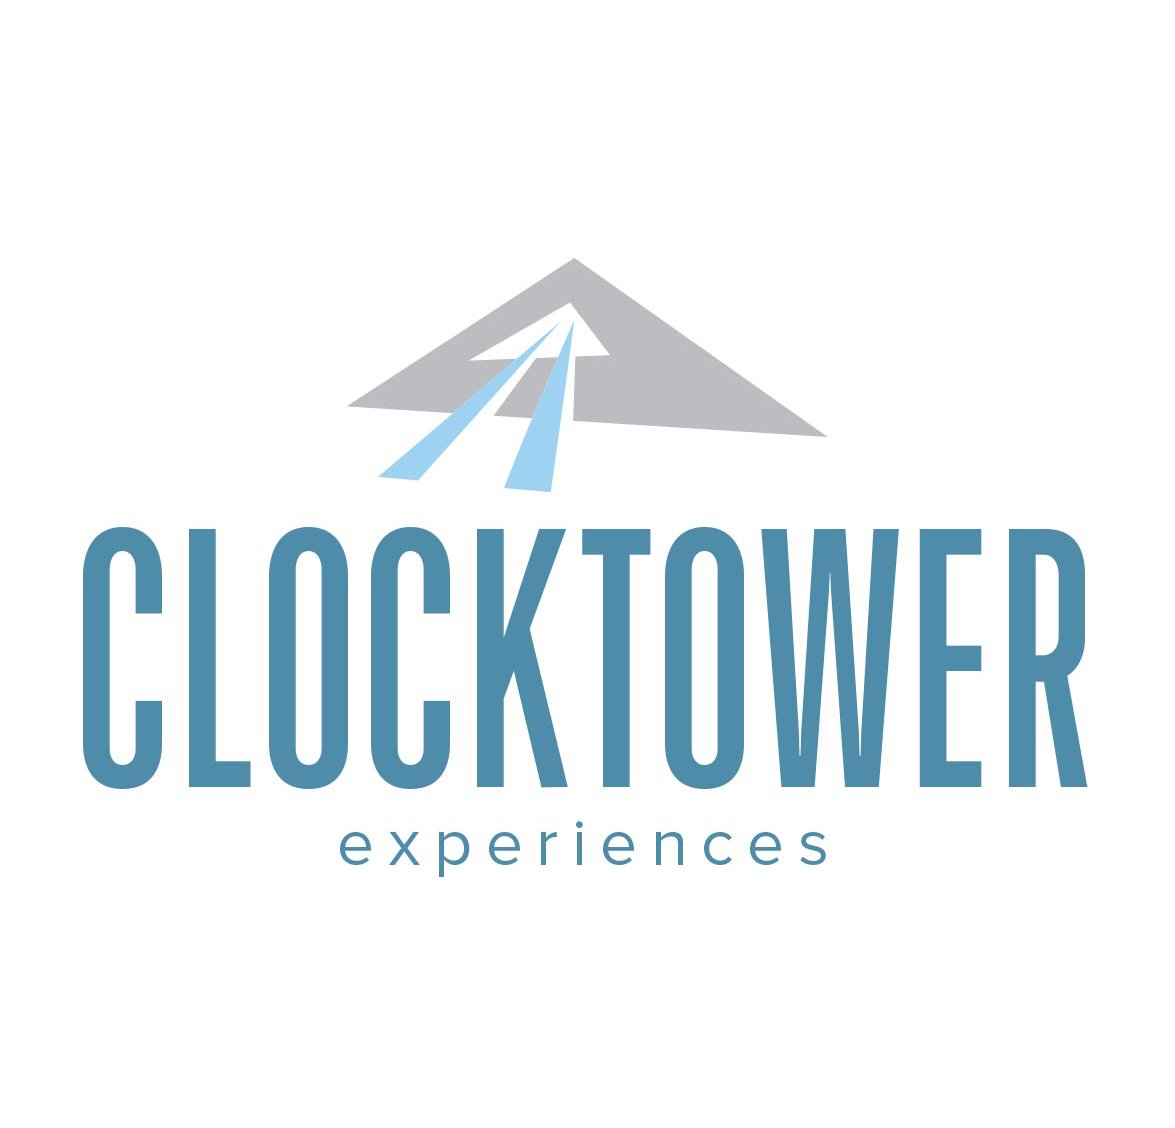 Clocktower Experiences